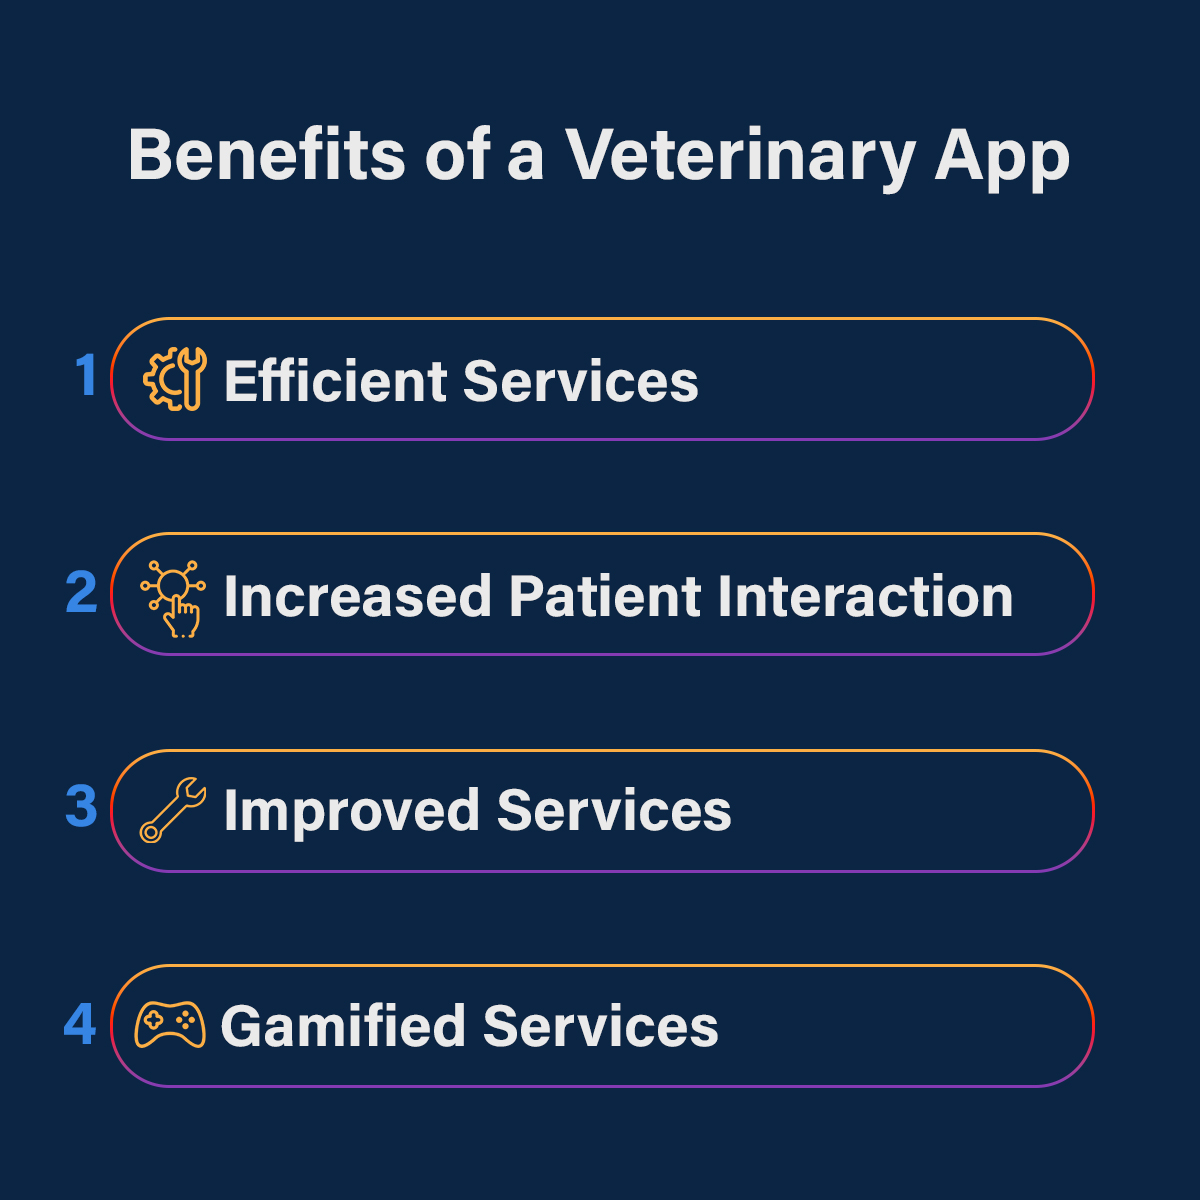 Benefits of a Veterinary App